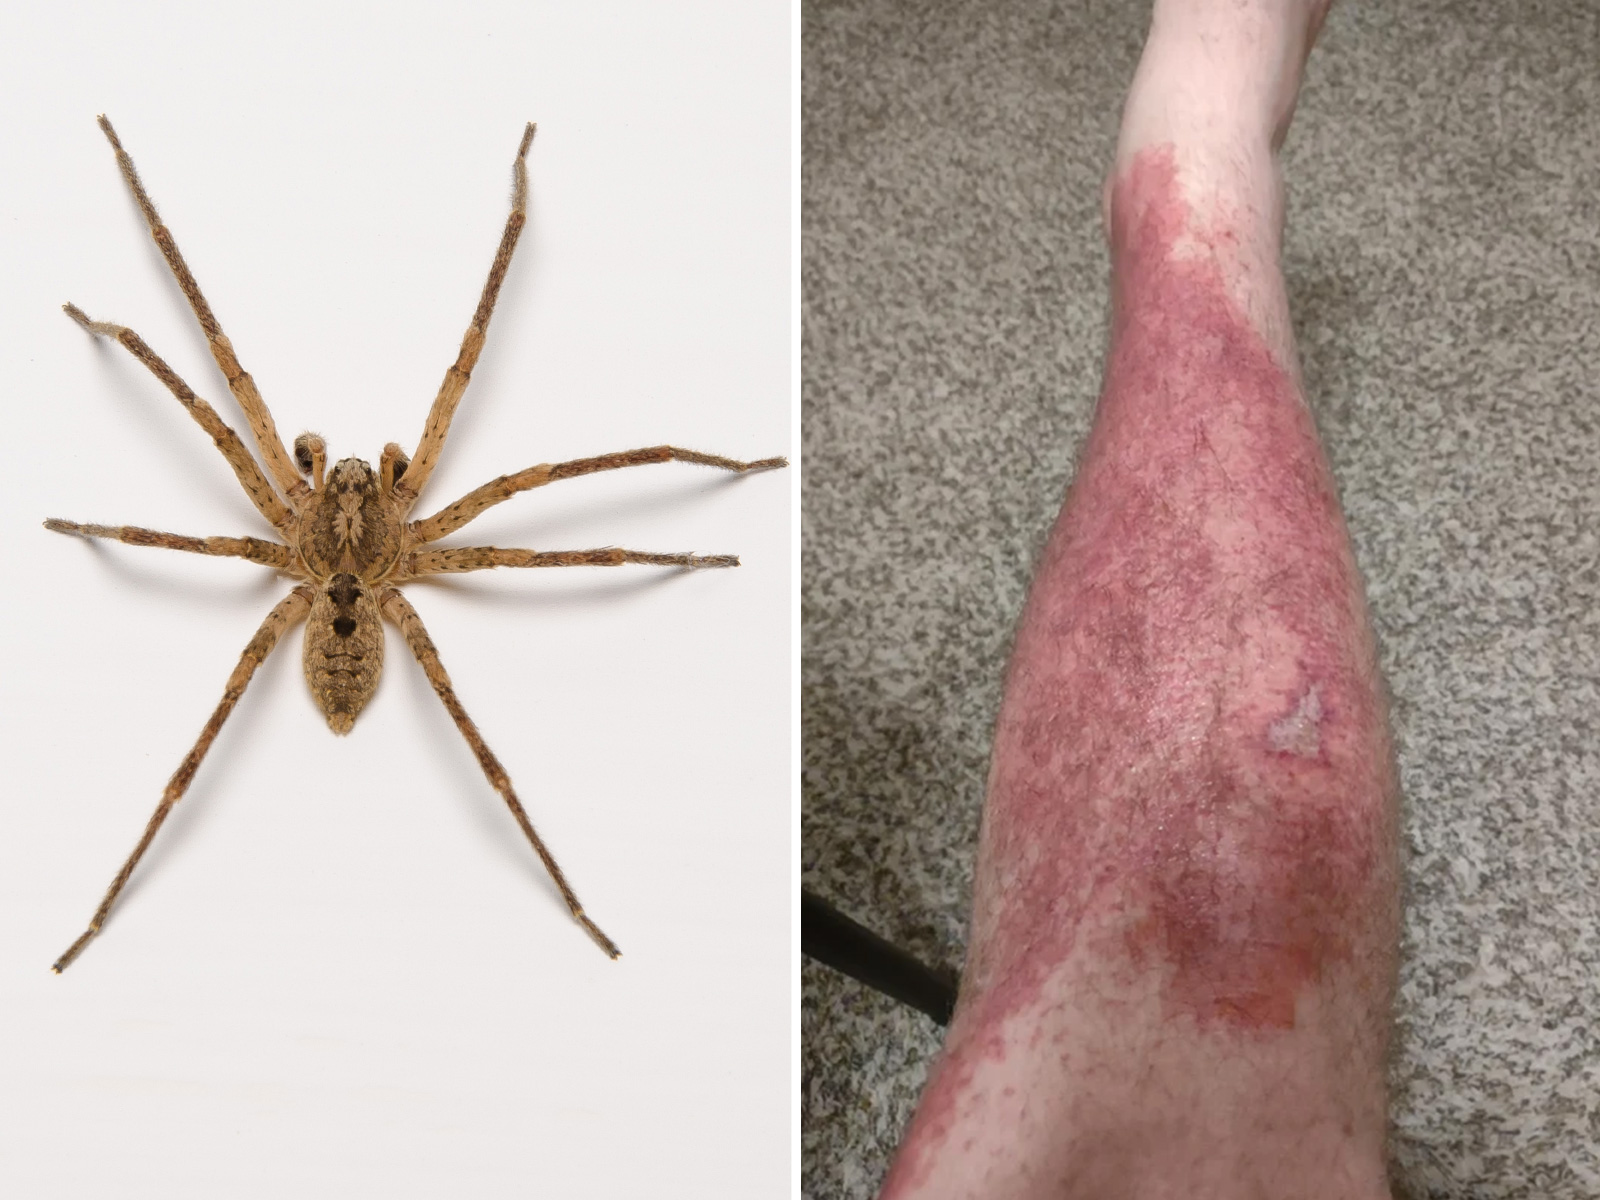 When Poisonous Spiders Bite